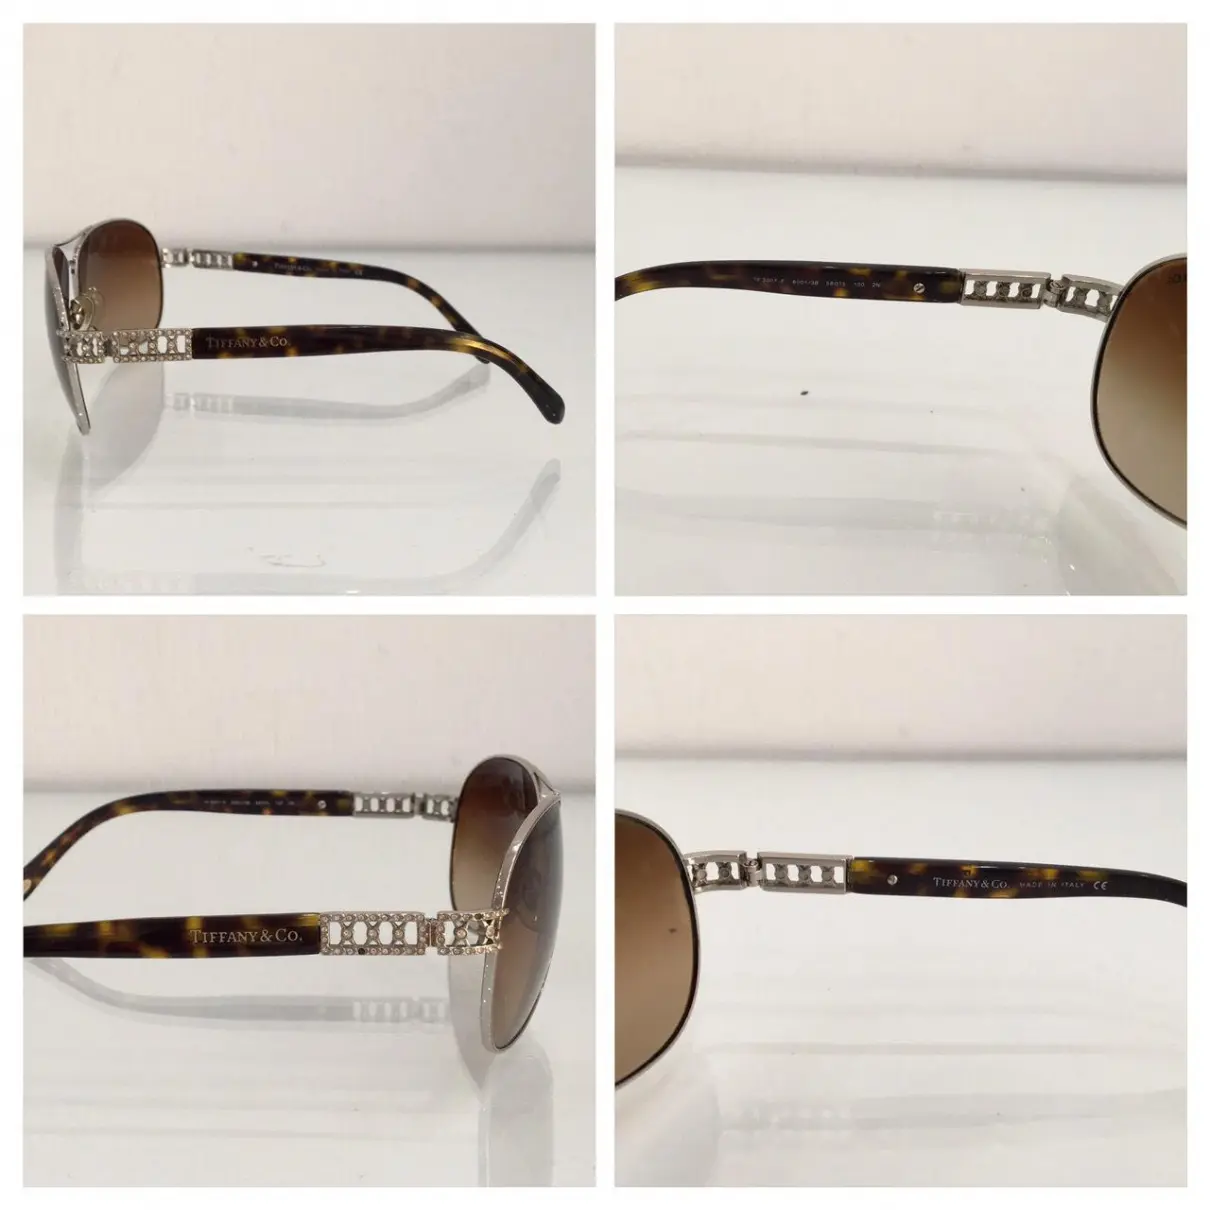 Tiffany & Co Aviator sunglasses for sale